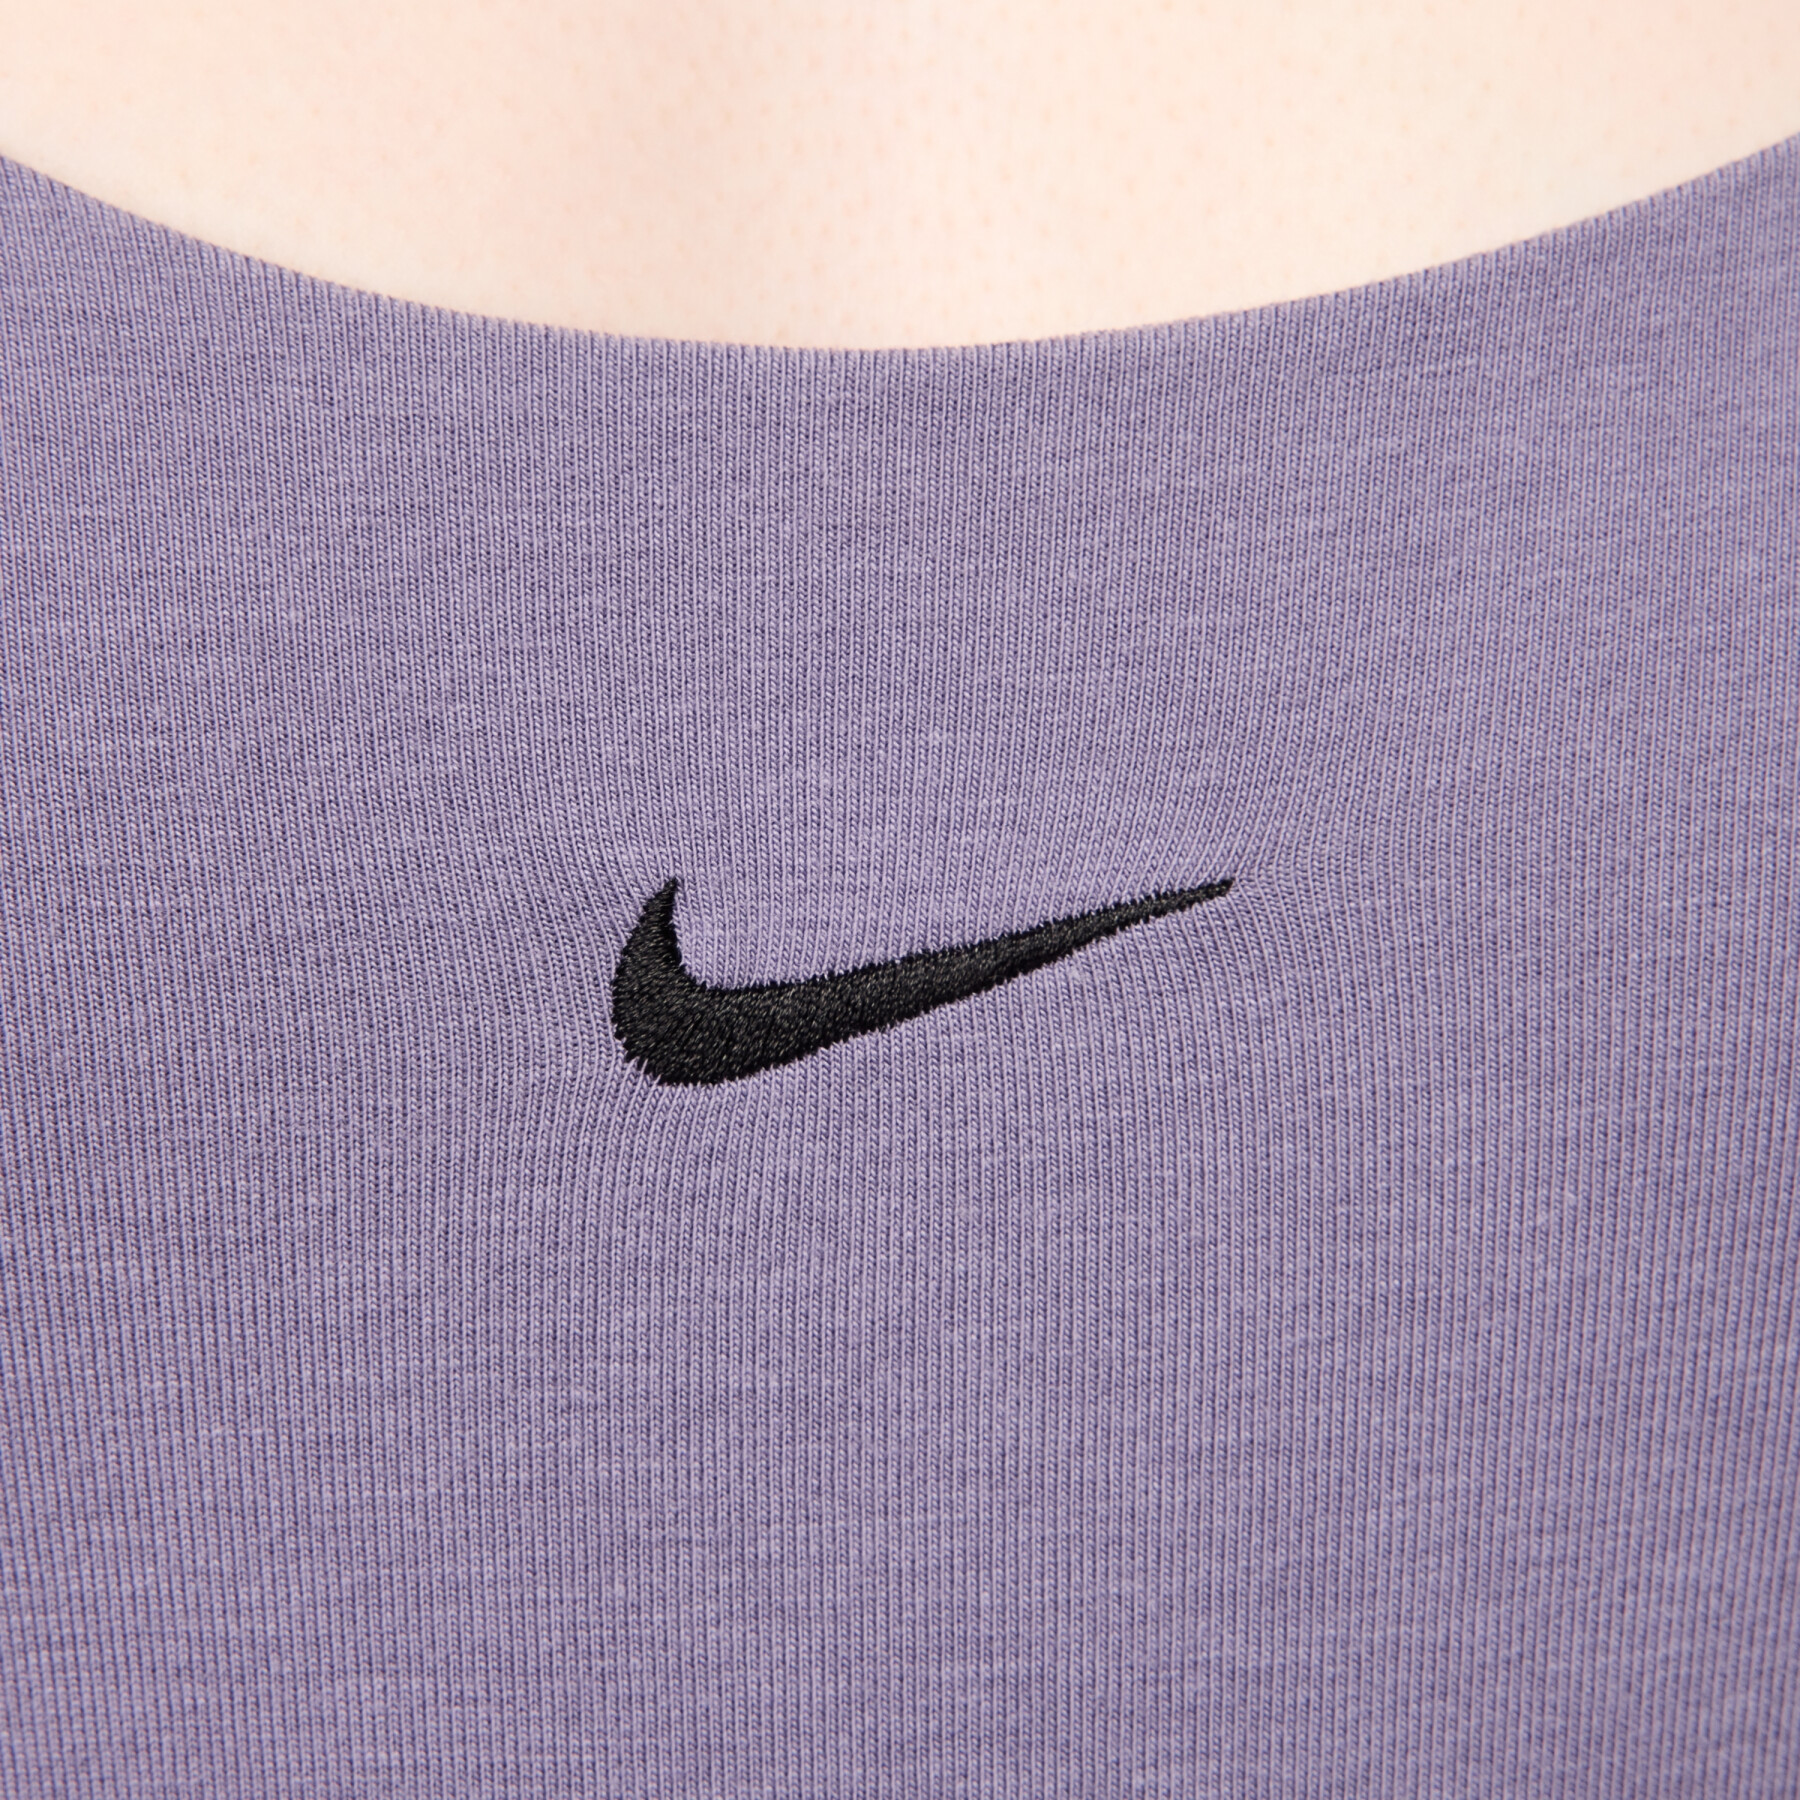 Women's tank top Nike Chill Knit